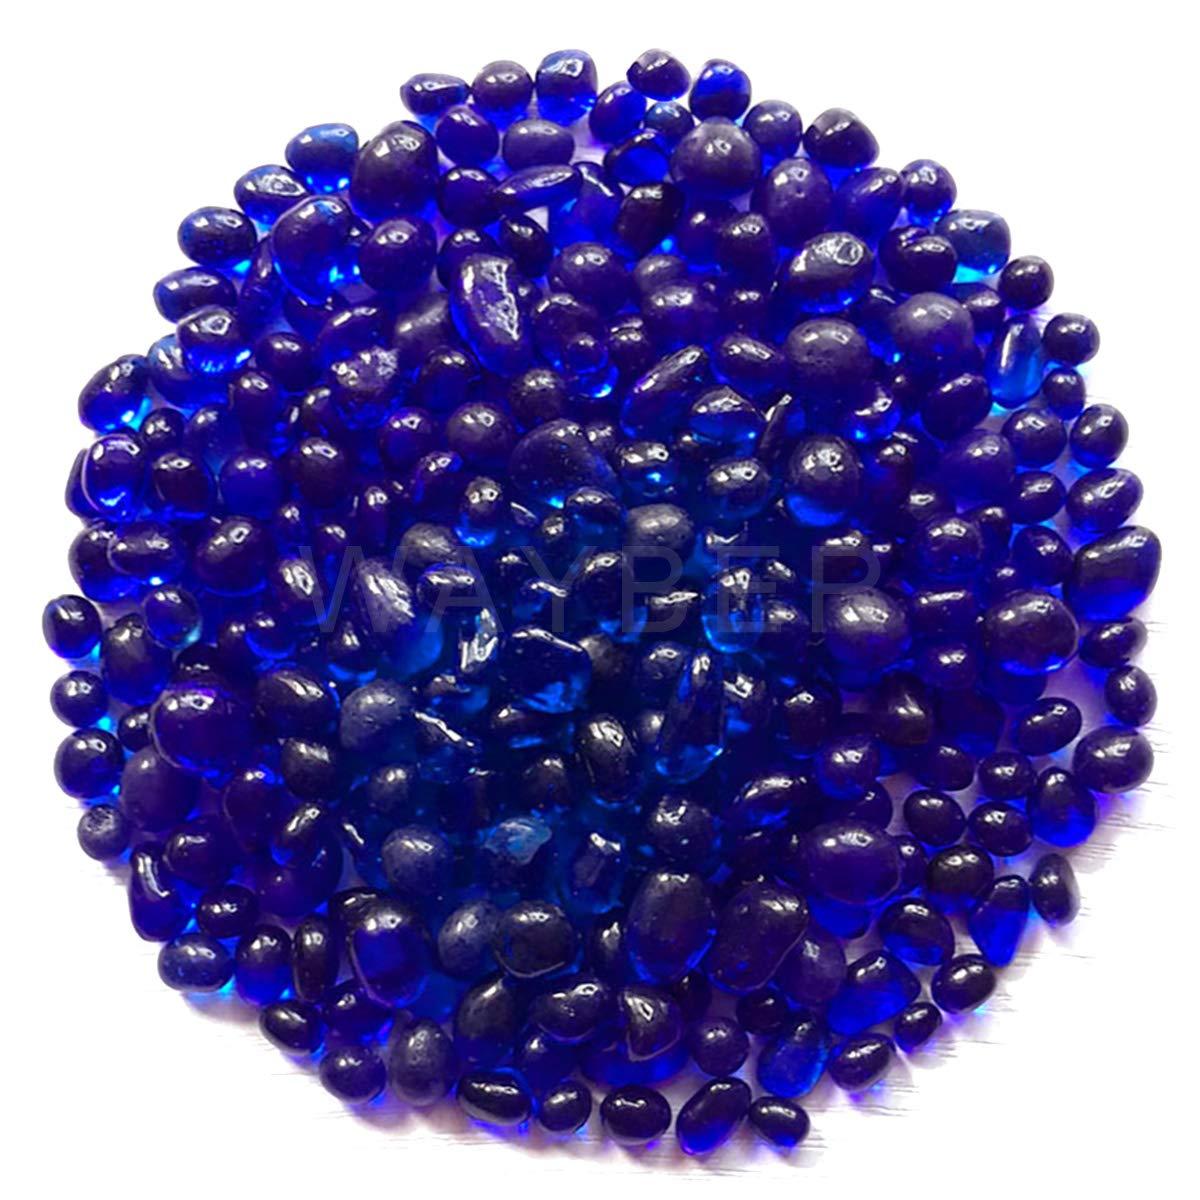 WAYBER Glass Stones, 1Lb/460g Irregular Sea Glass Pebbles Non-Toxic Artificial Gemstones for Gem Display/Vase Filler/Terrarium Flowerpot Aquarium Turtle Tank Decoration, Dark Blue